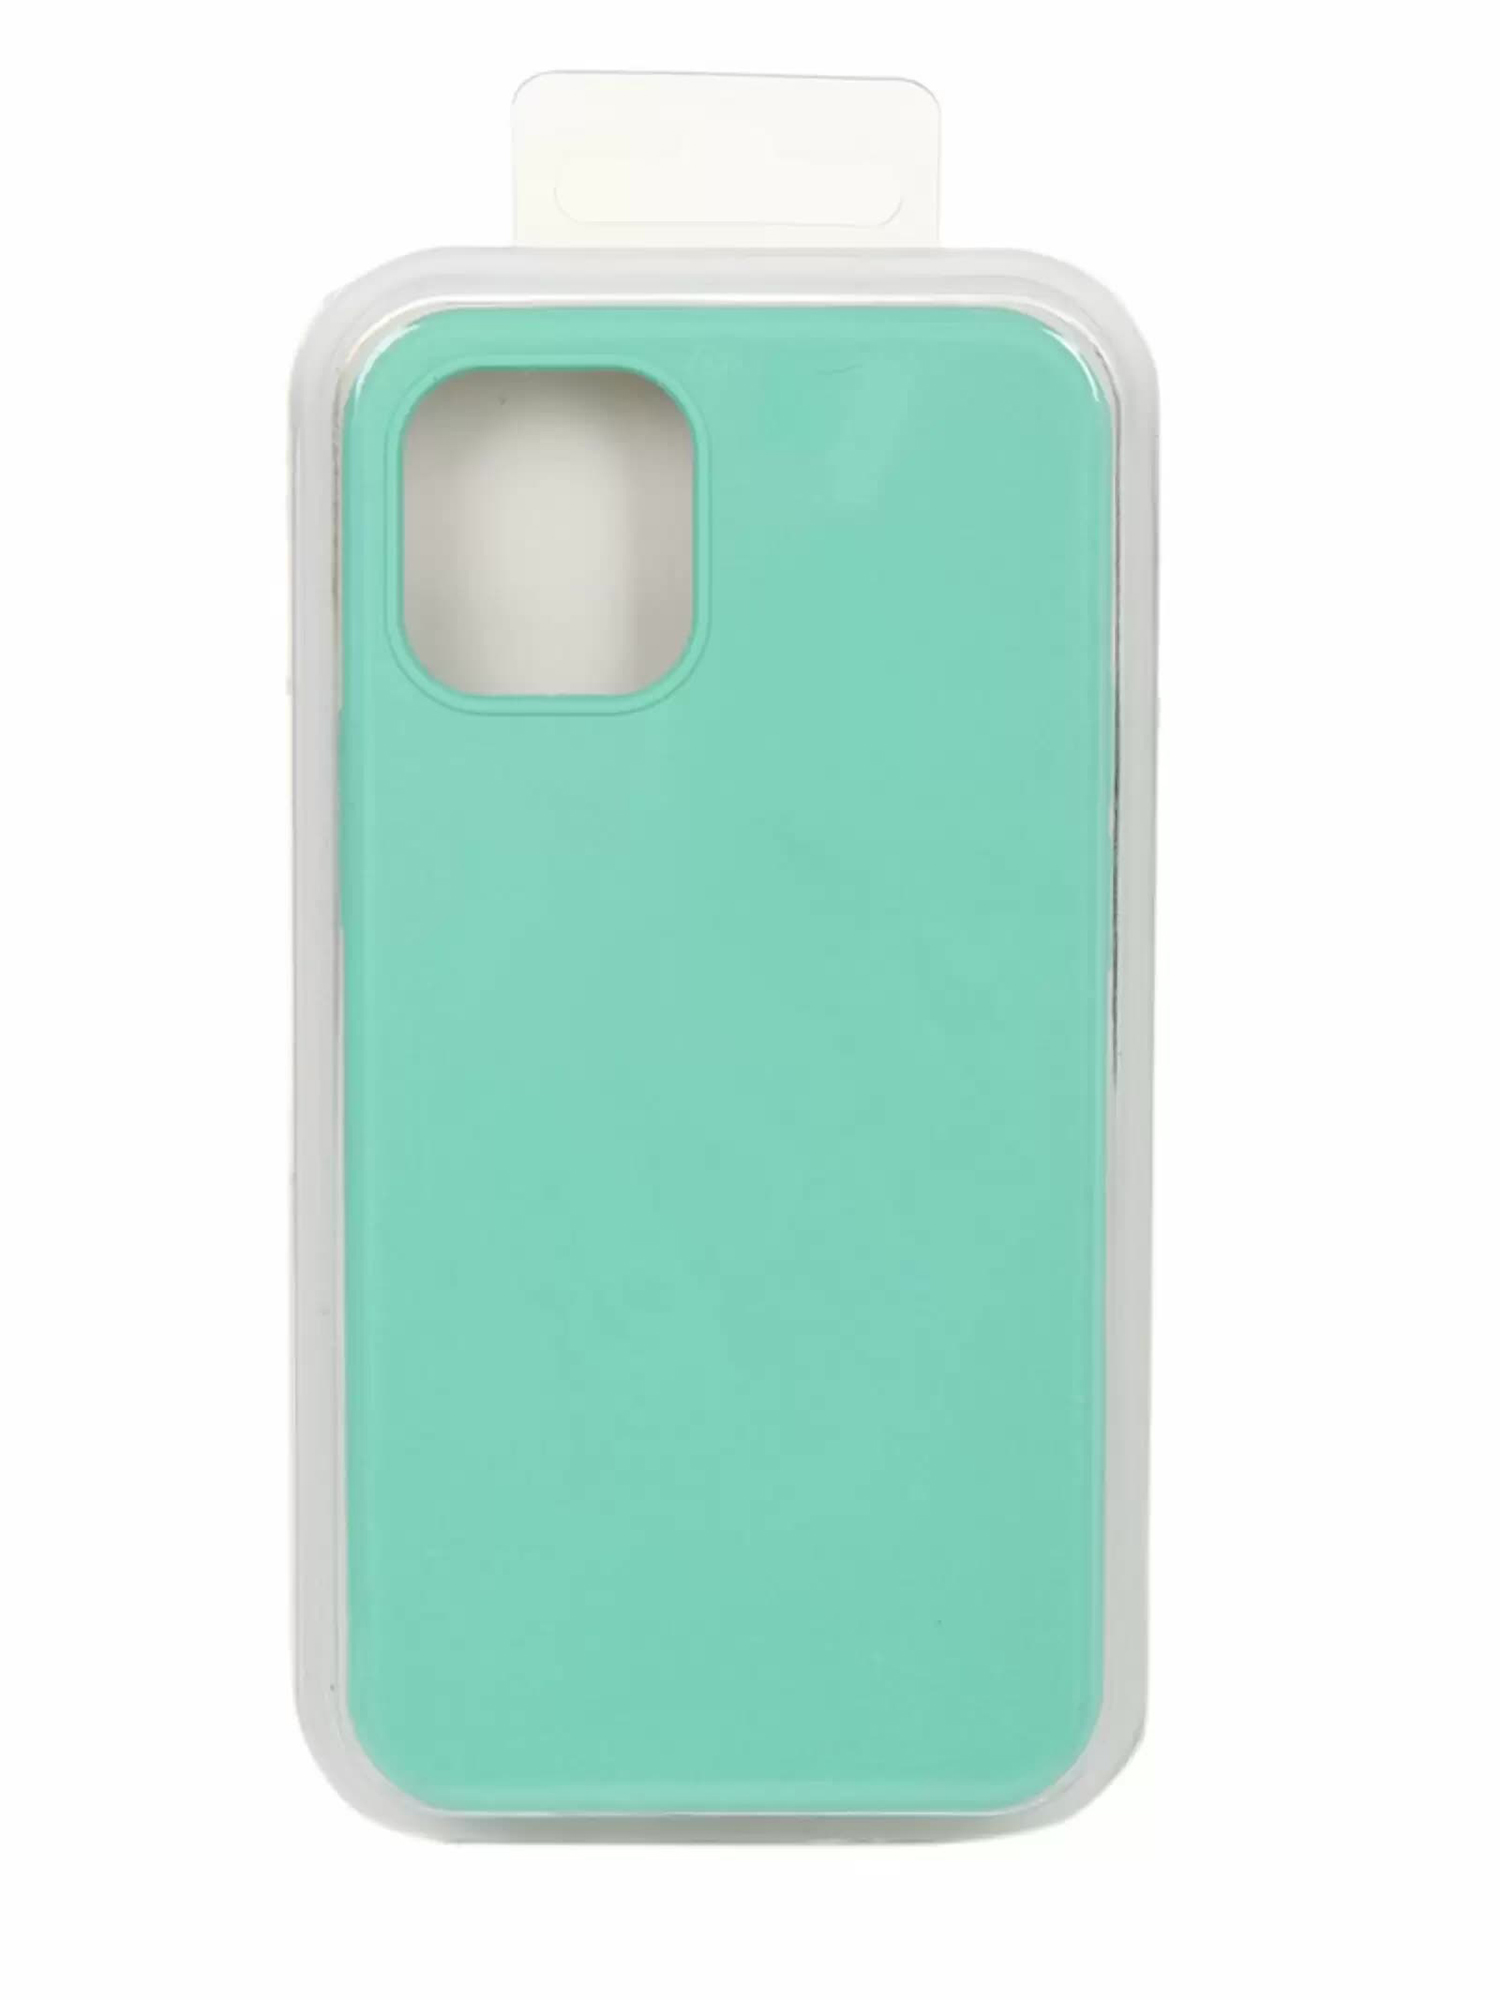 Чехол Innovation для APPLE iPhone 12 Silicone Soft Inside Turquoise 18011 чехол innovation для apple iphone 12 mini silicone soft inside red 18007